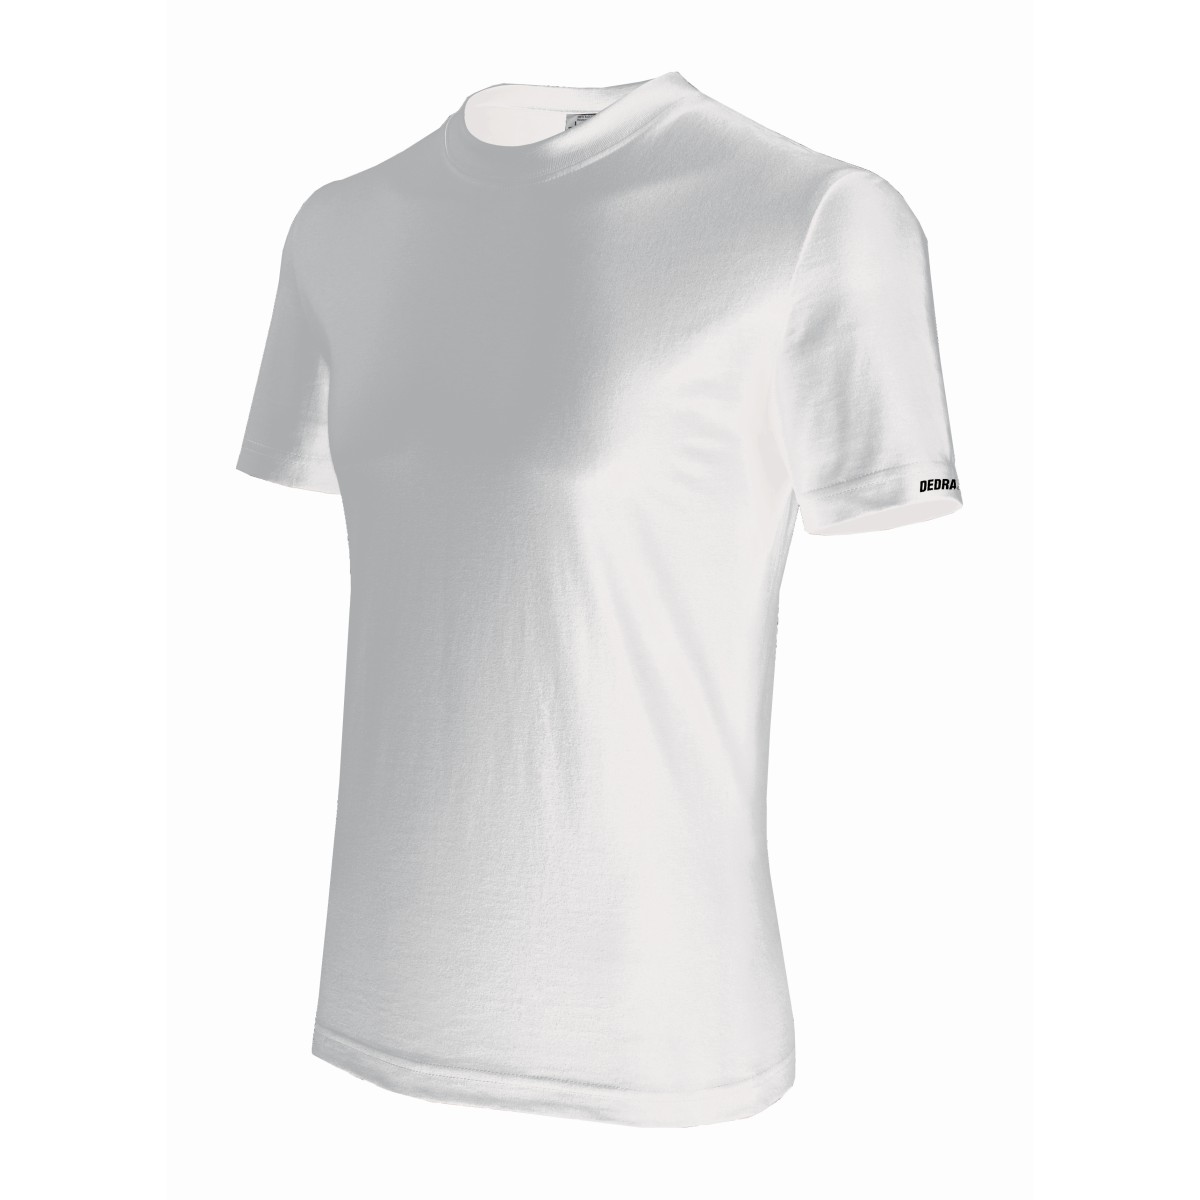 Tričko pánské L, bílý, 100 % bavlna DEDRA BH5TW-L